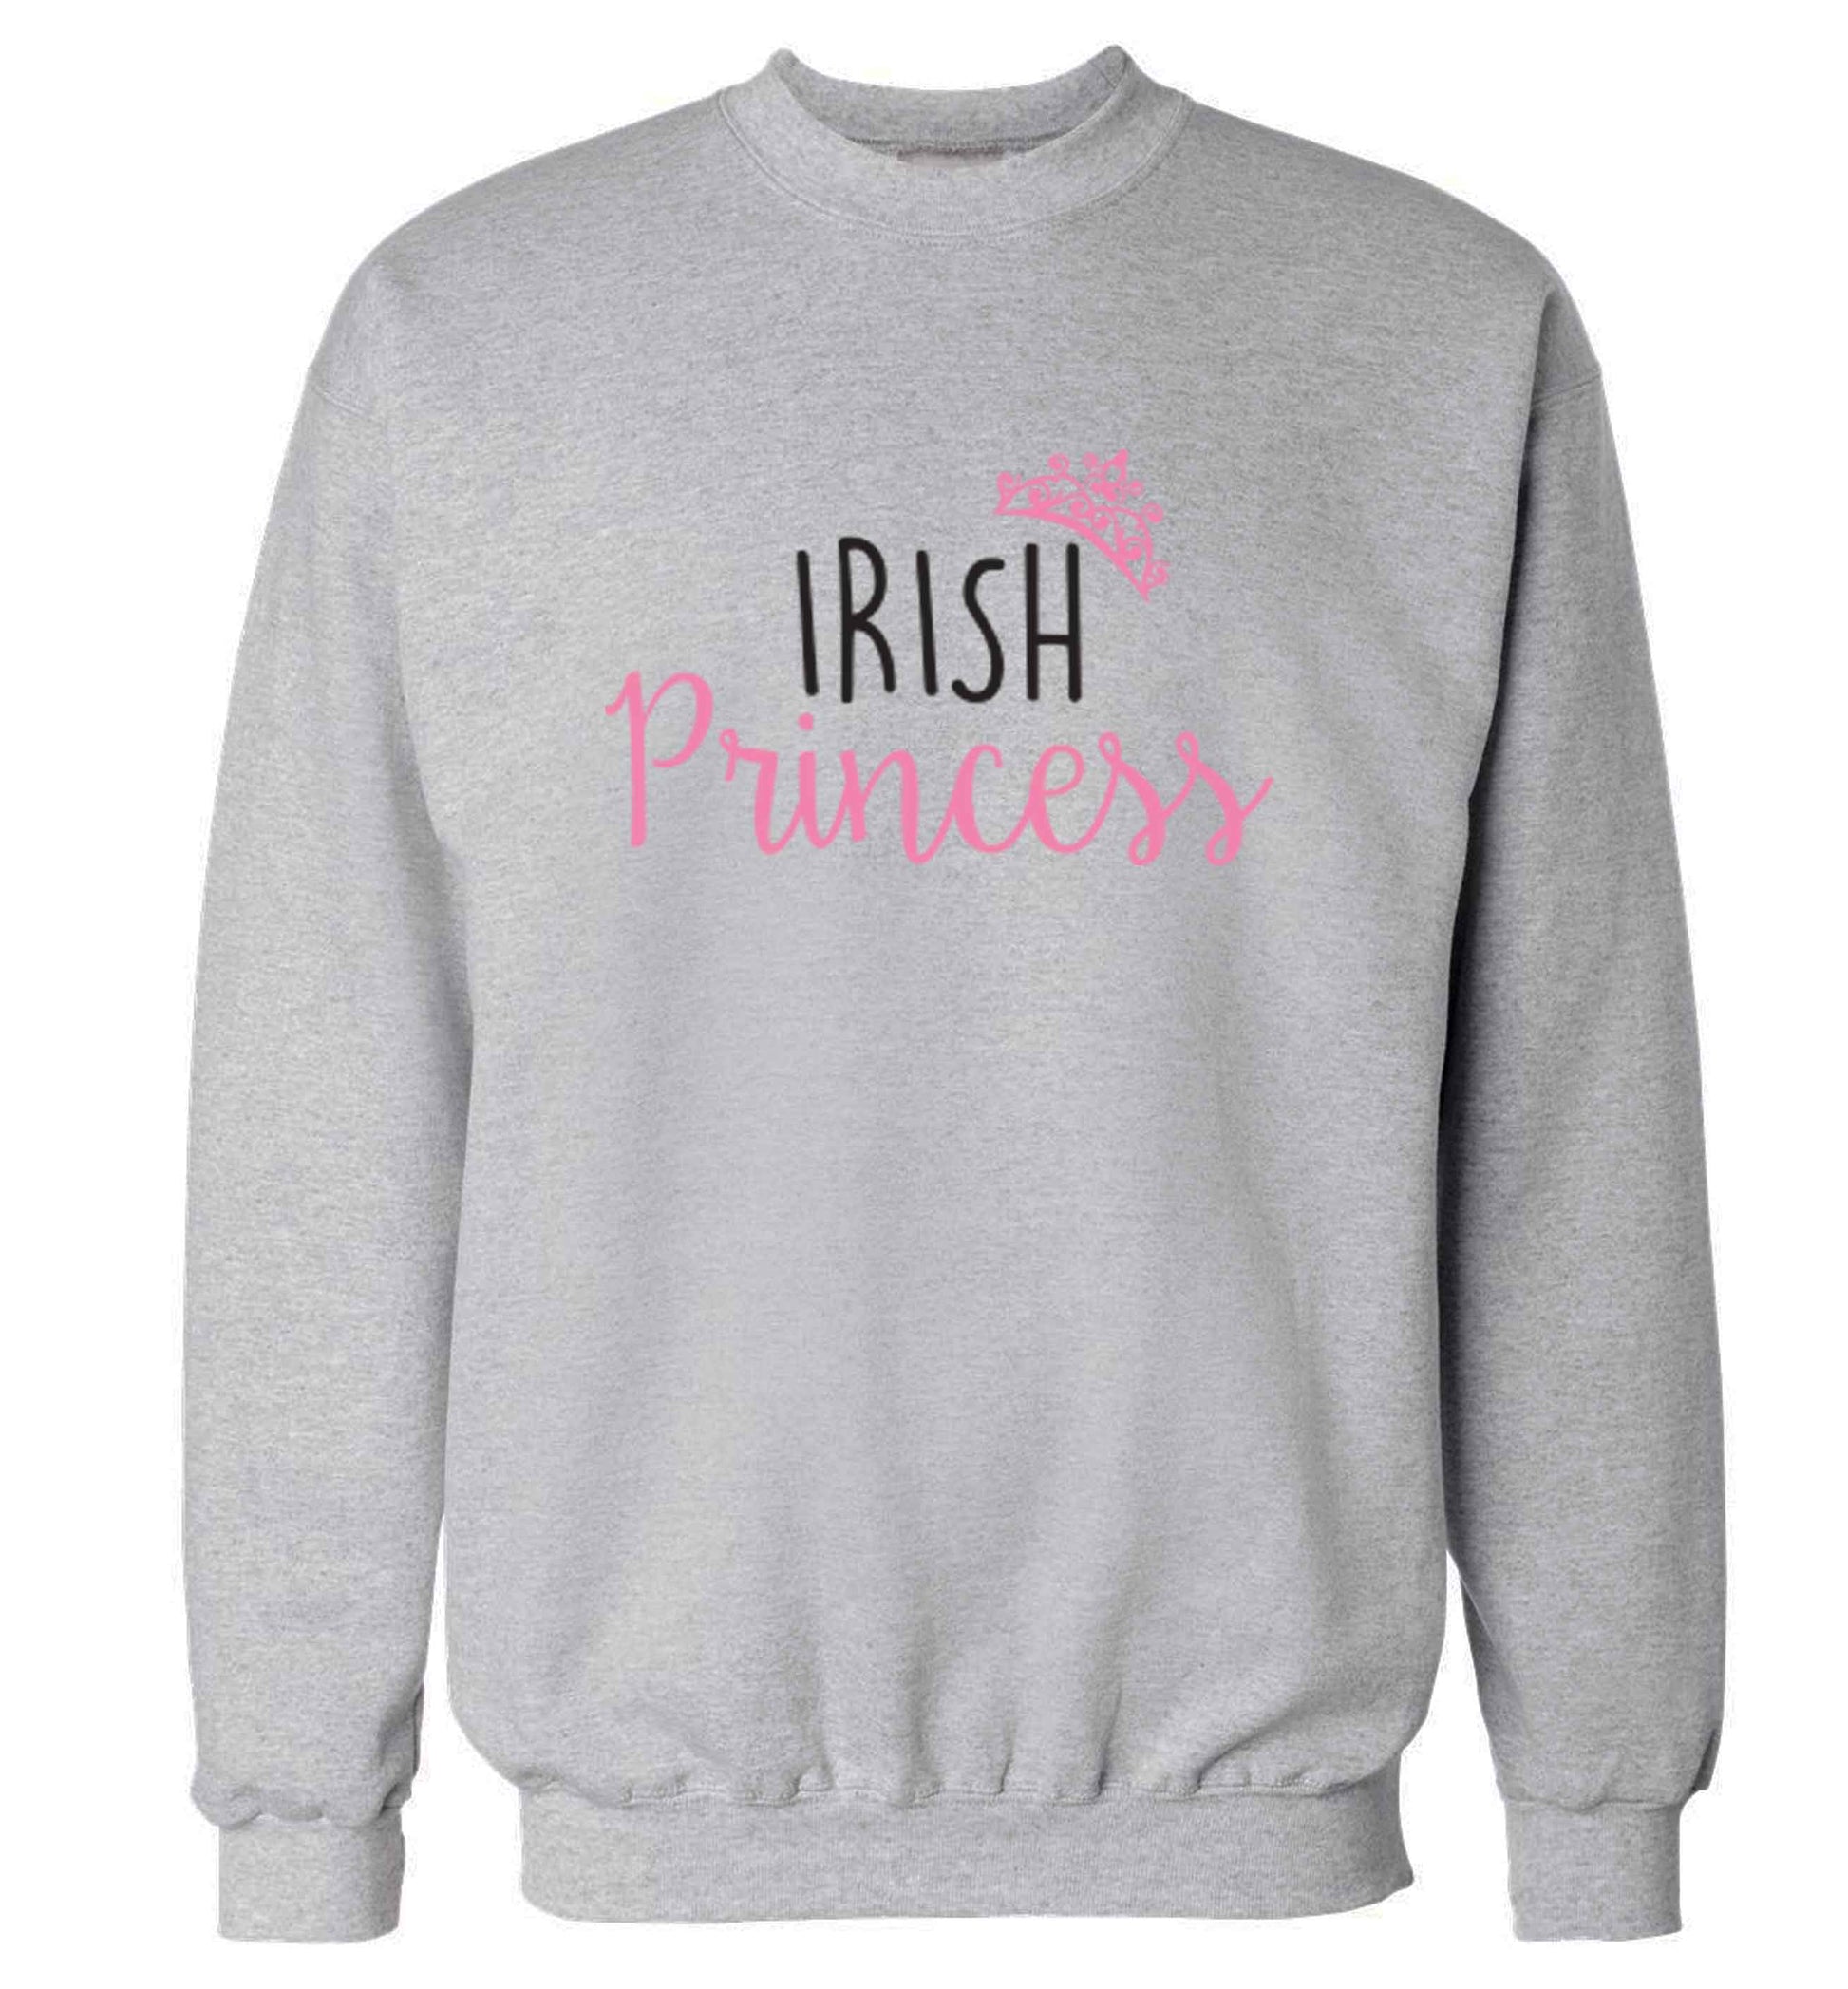 Irish princess adult's unisex grey sweater 2XL